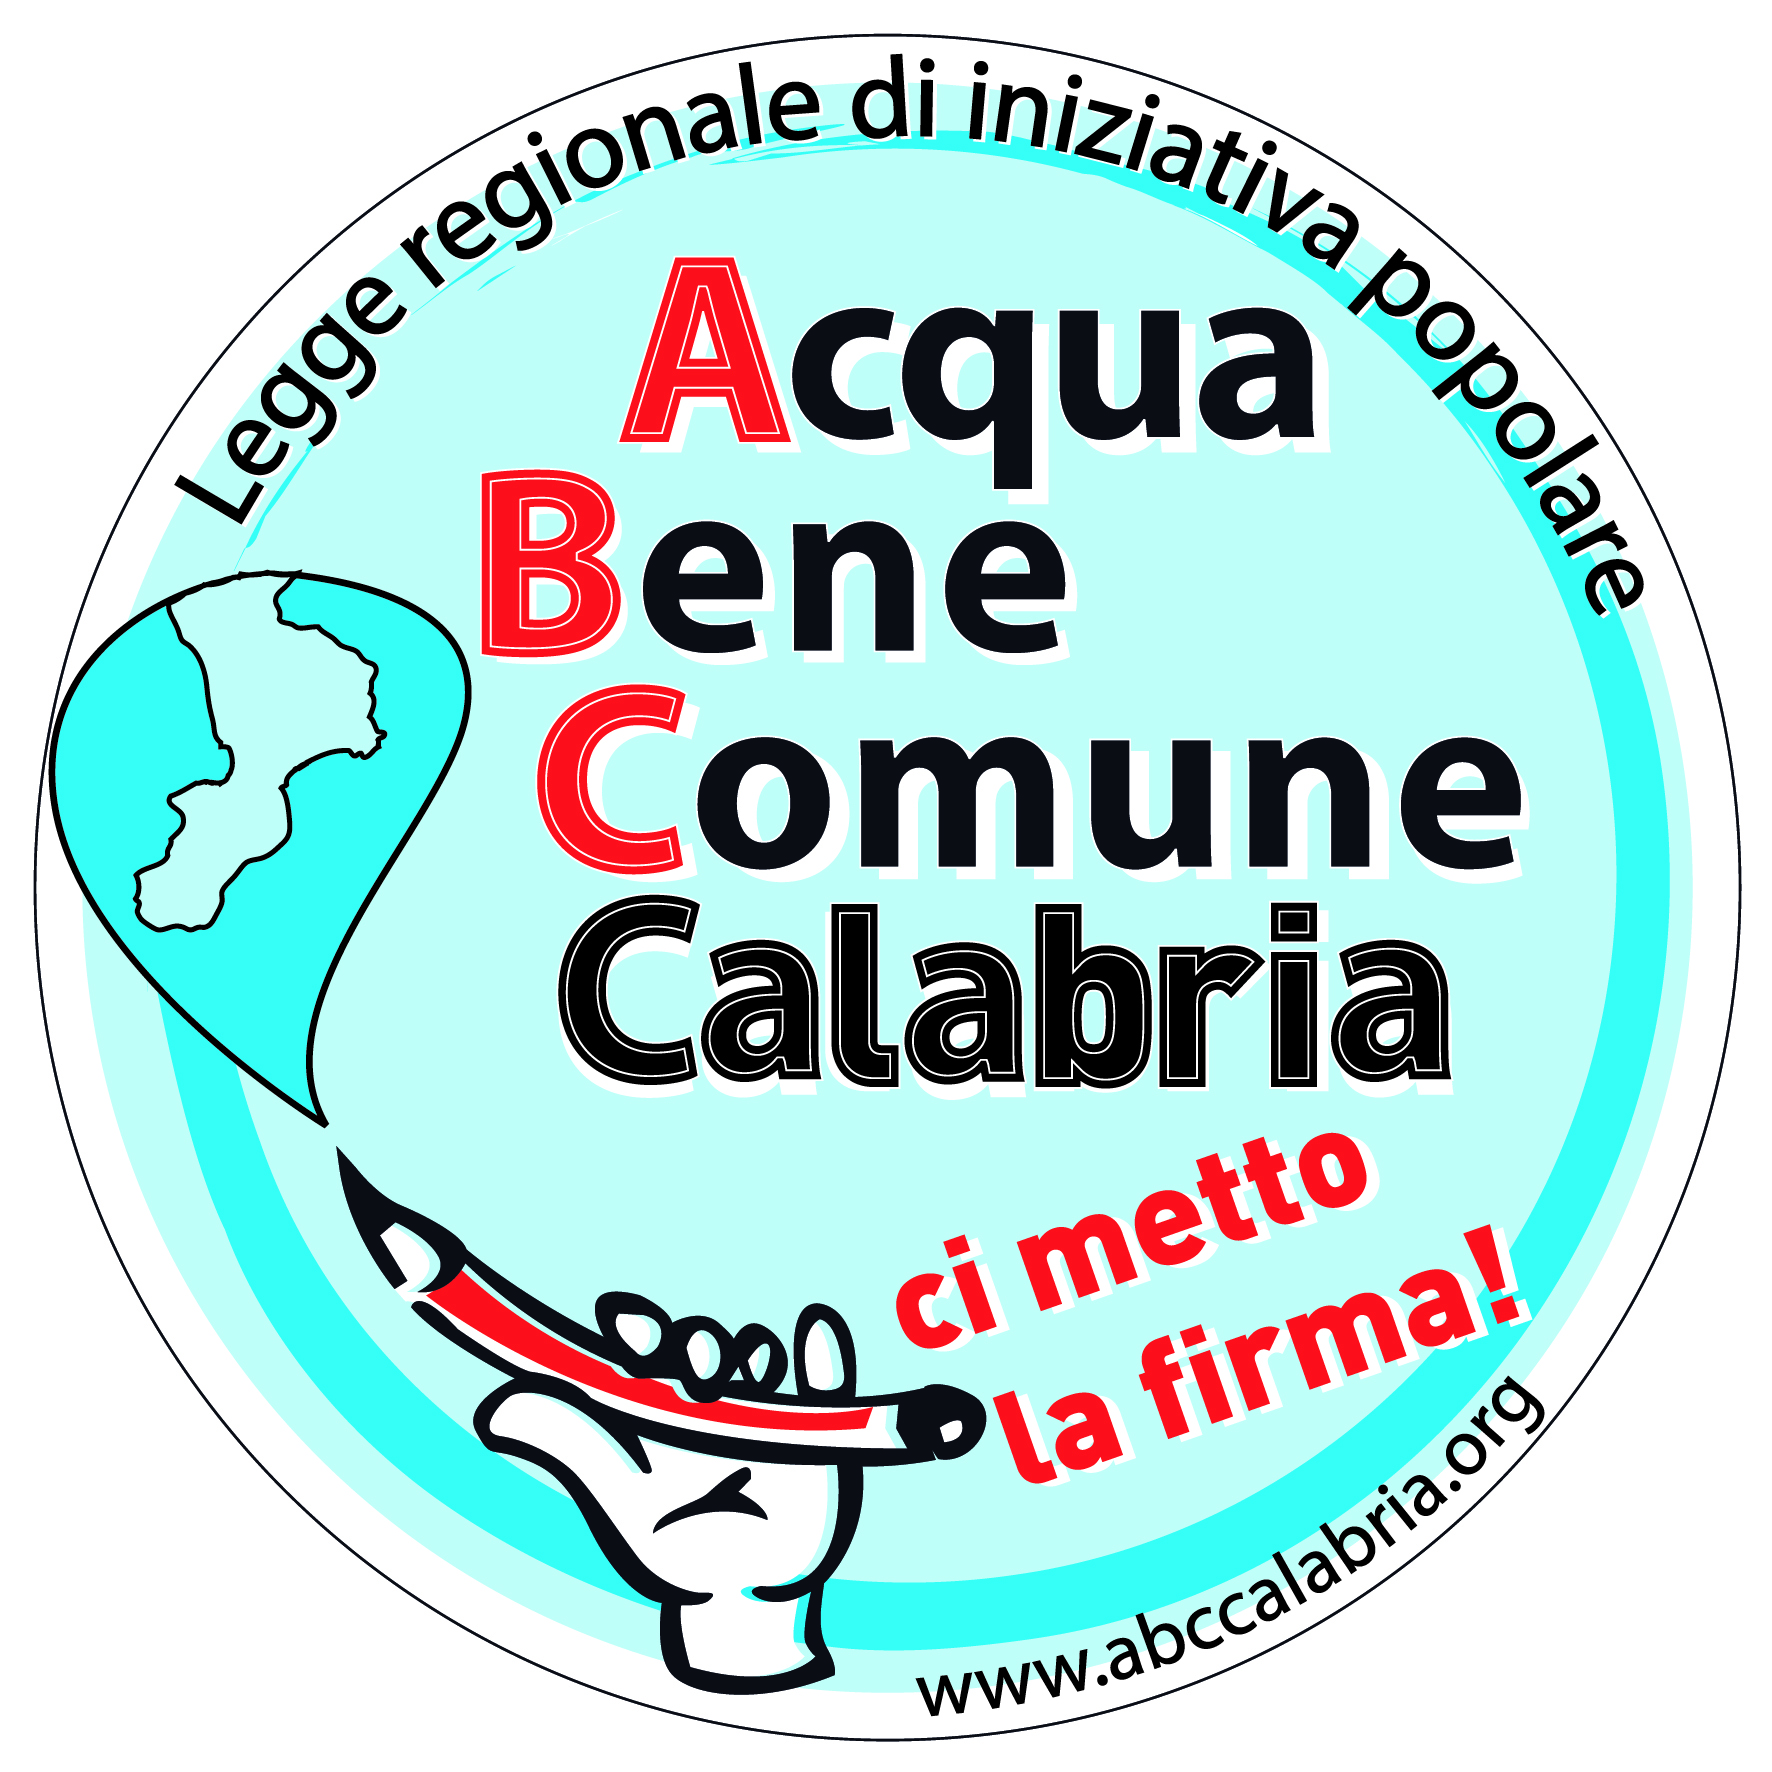 calabria_logo_campagna